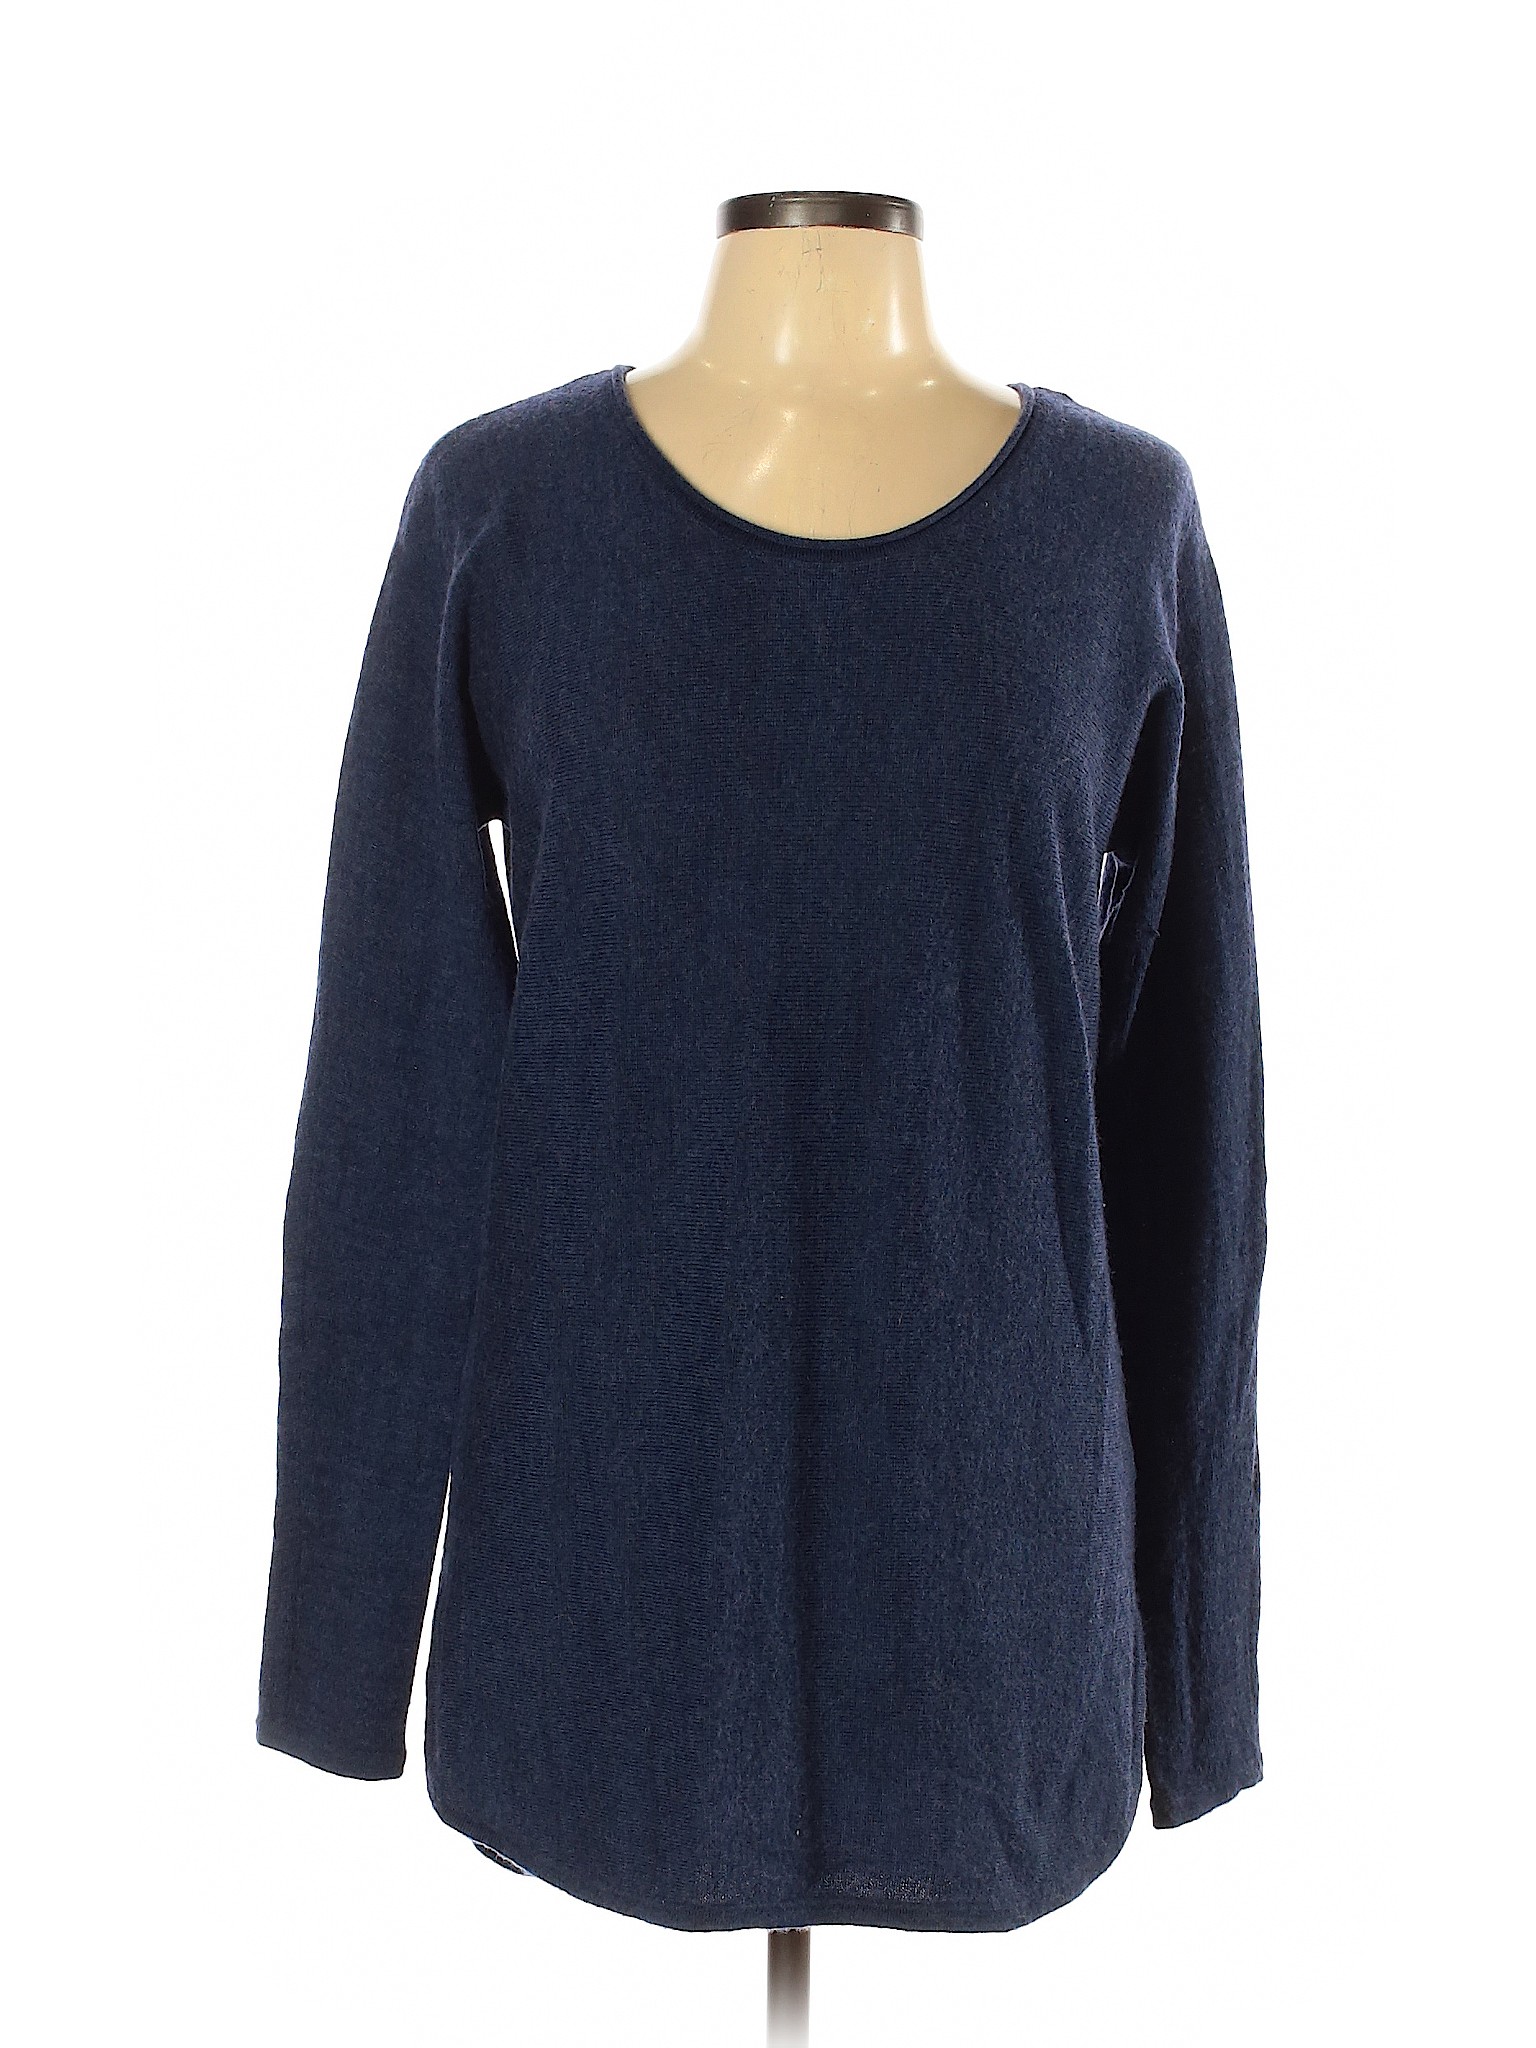 Max Studio Women Blue Wool Pullover Sweater L | eBay